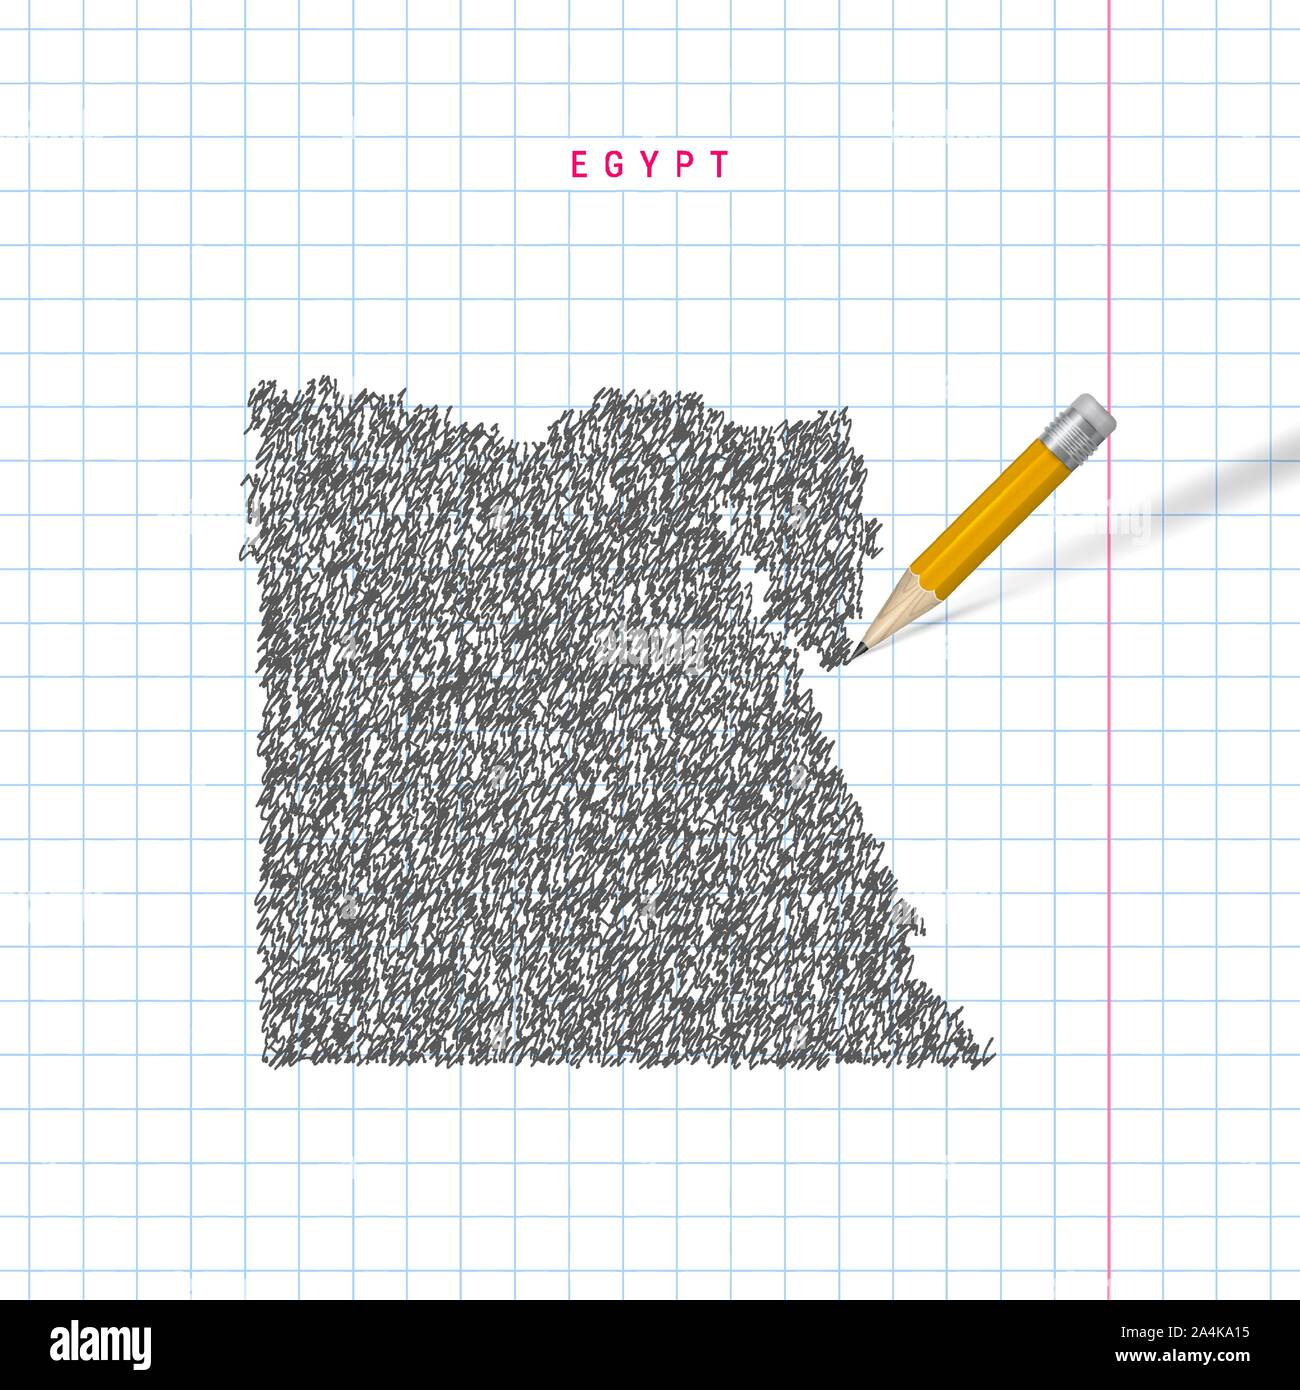 Egipto sketch mapa dibujado a mano alzada sobre papel cuadriculado cuaderno escolar de fondo. Mapa de vectores dibujados a mano de Egipto. Lápiz 3D realistas con caucho Imagen Vector de stock -